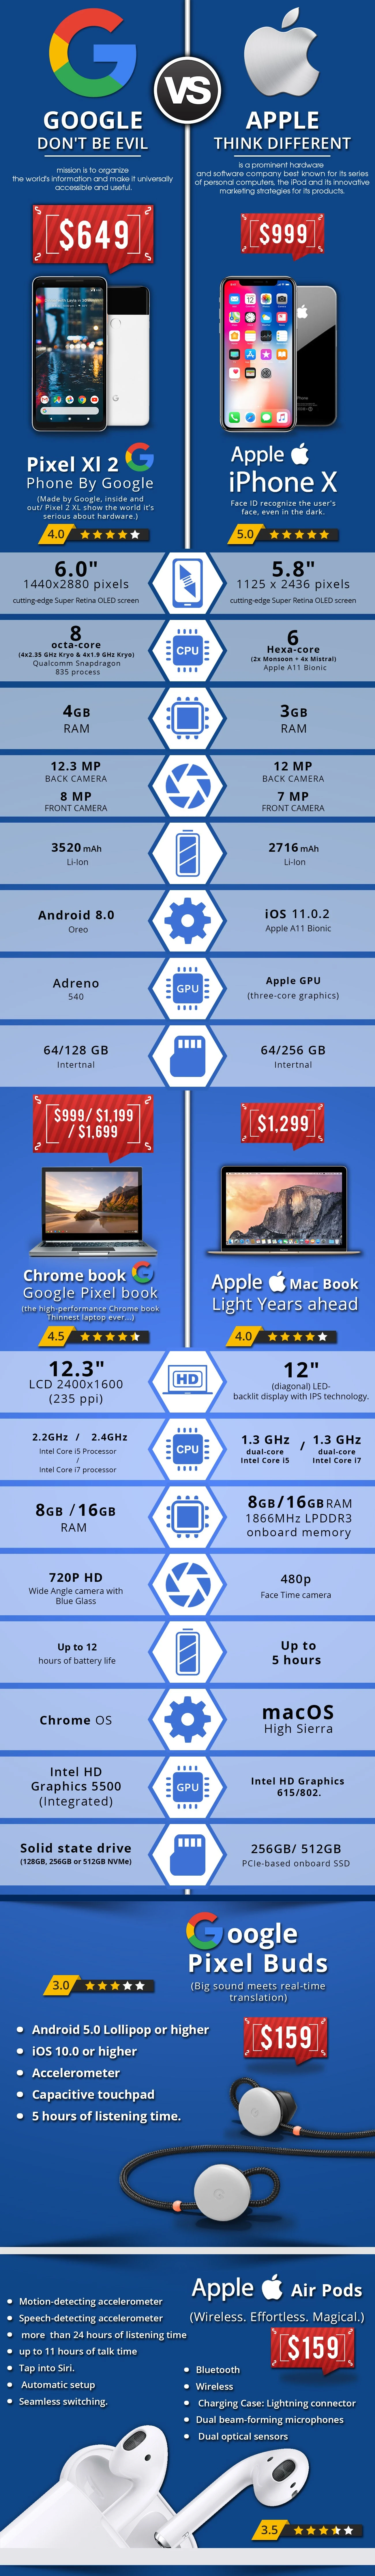 Google vs Apple - #infographic